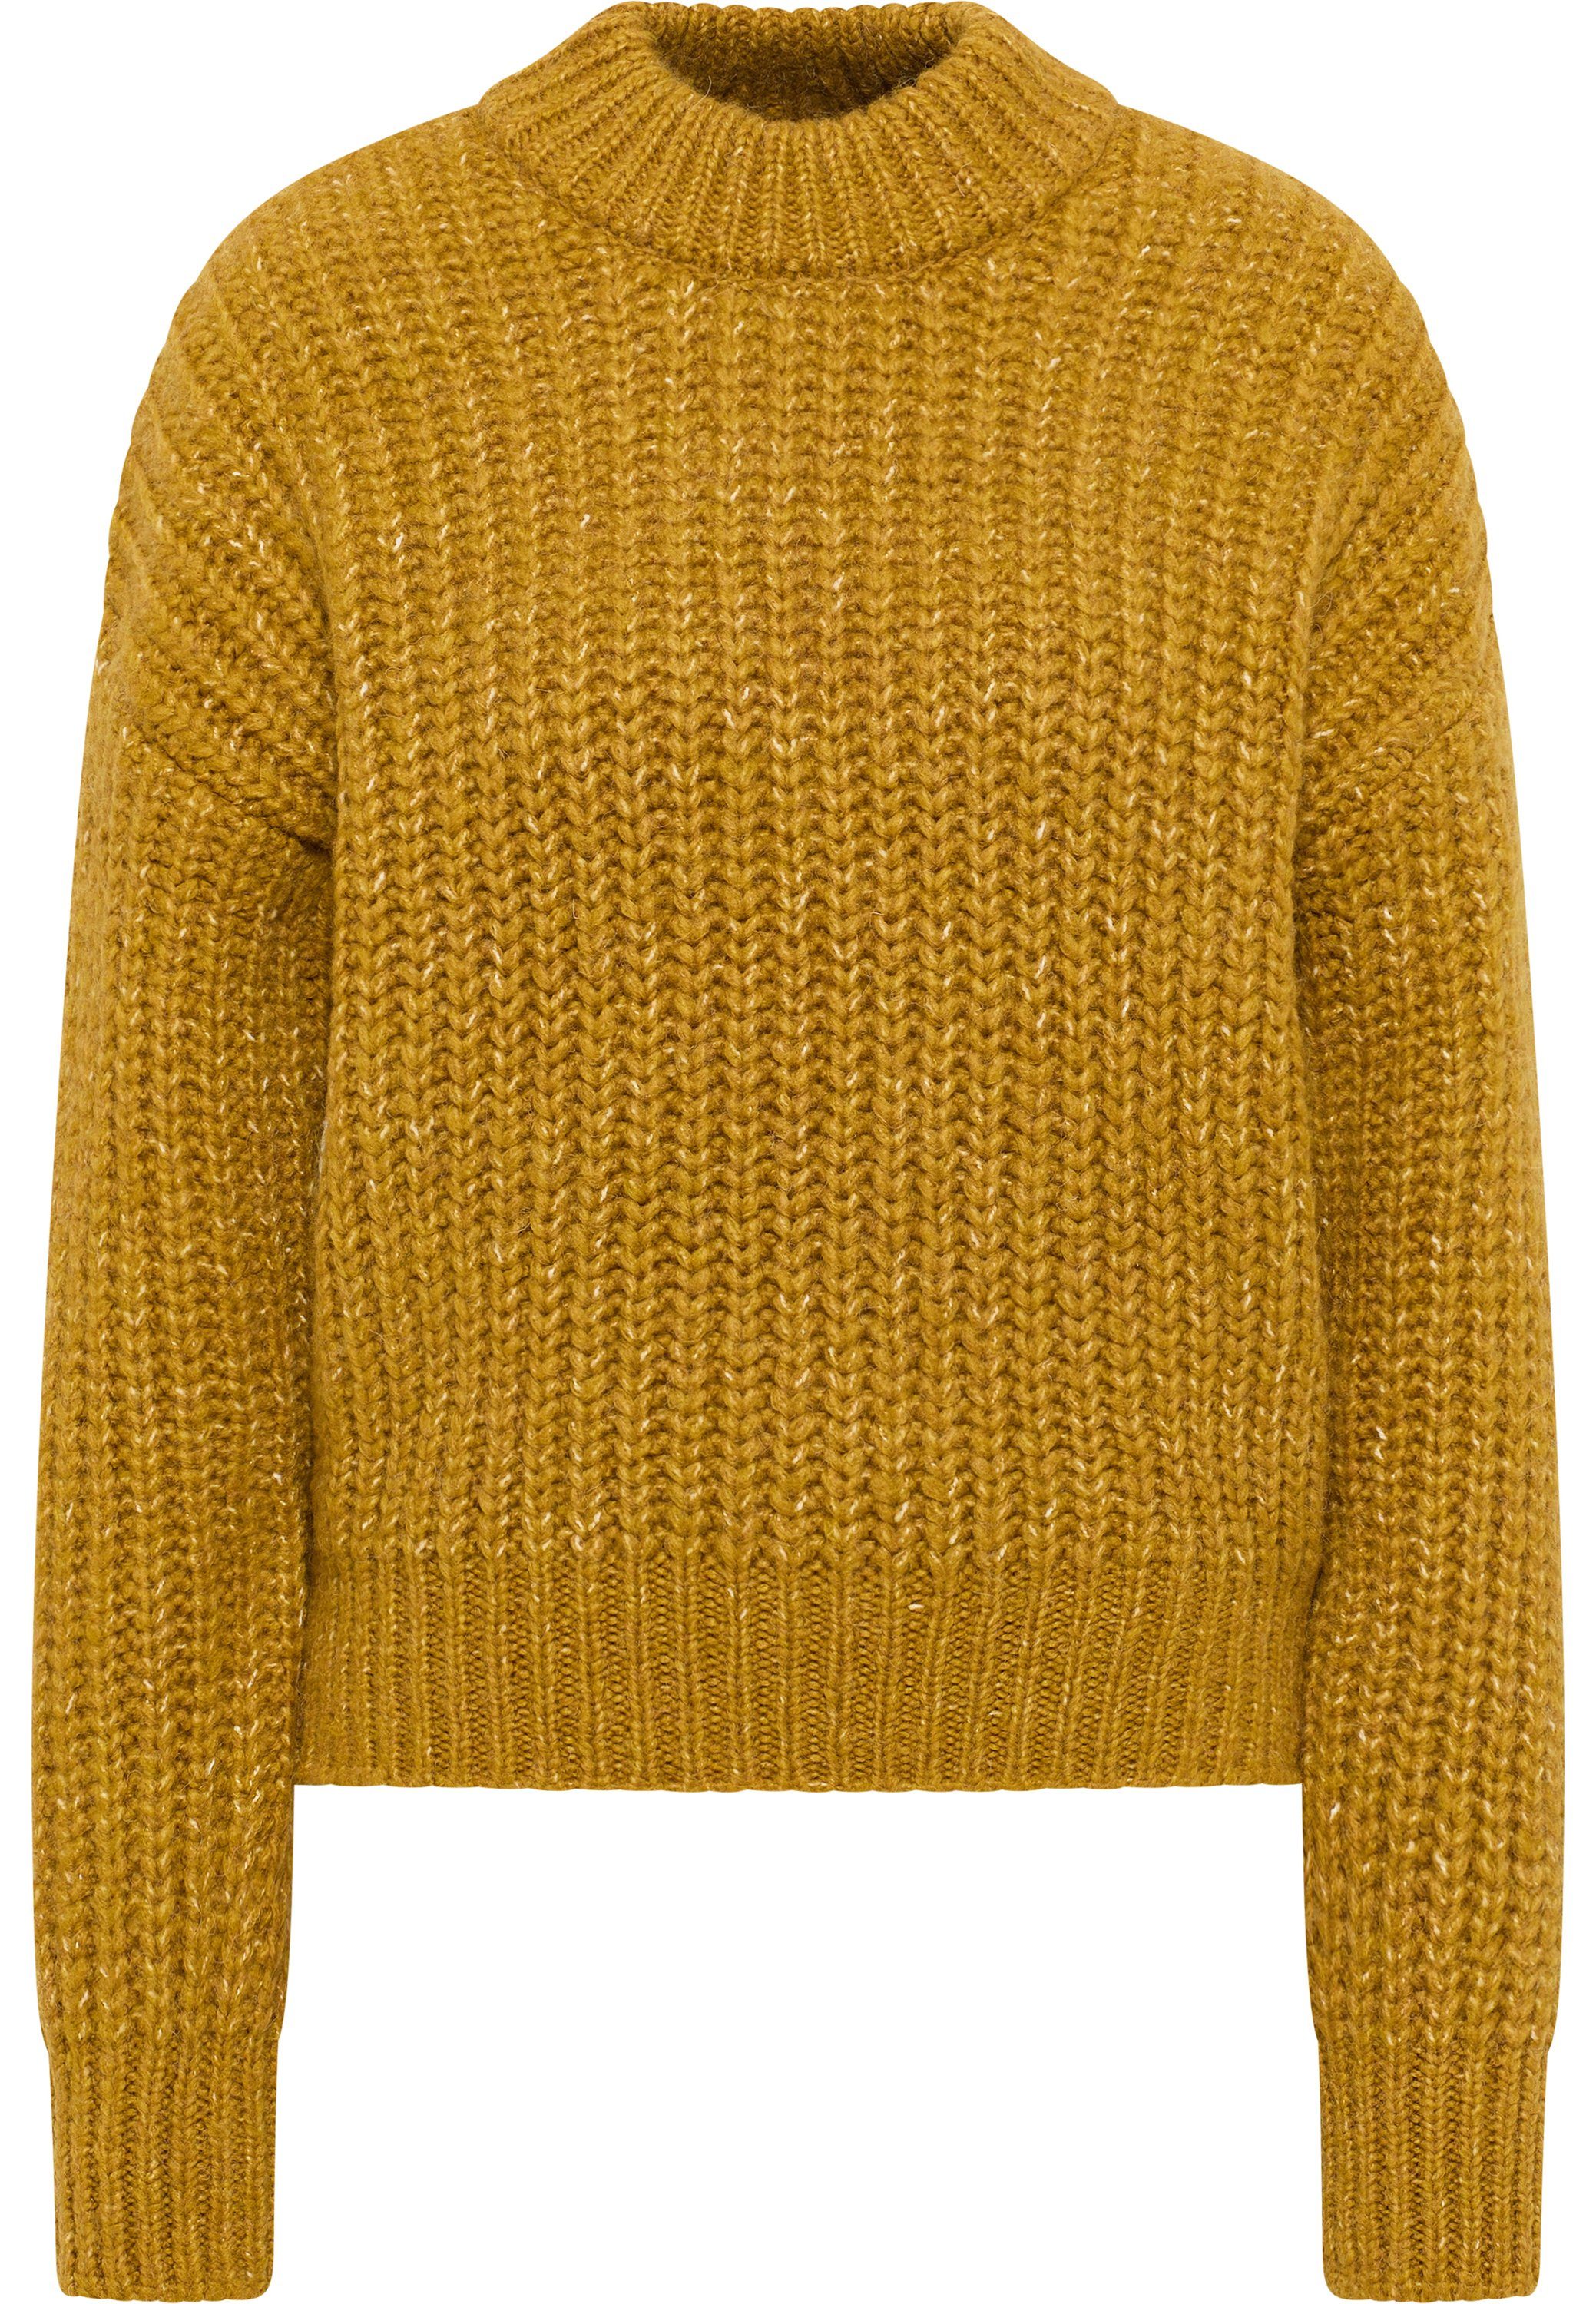 MUSTANG Sweater В'язані светри